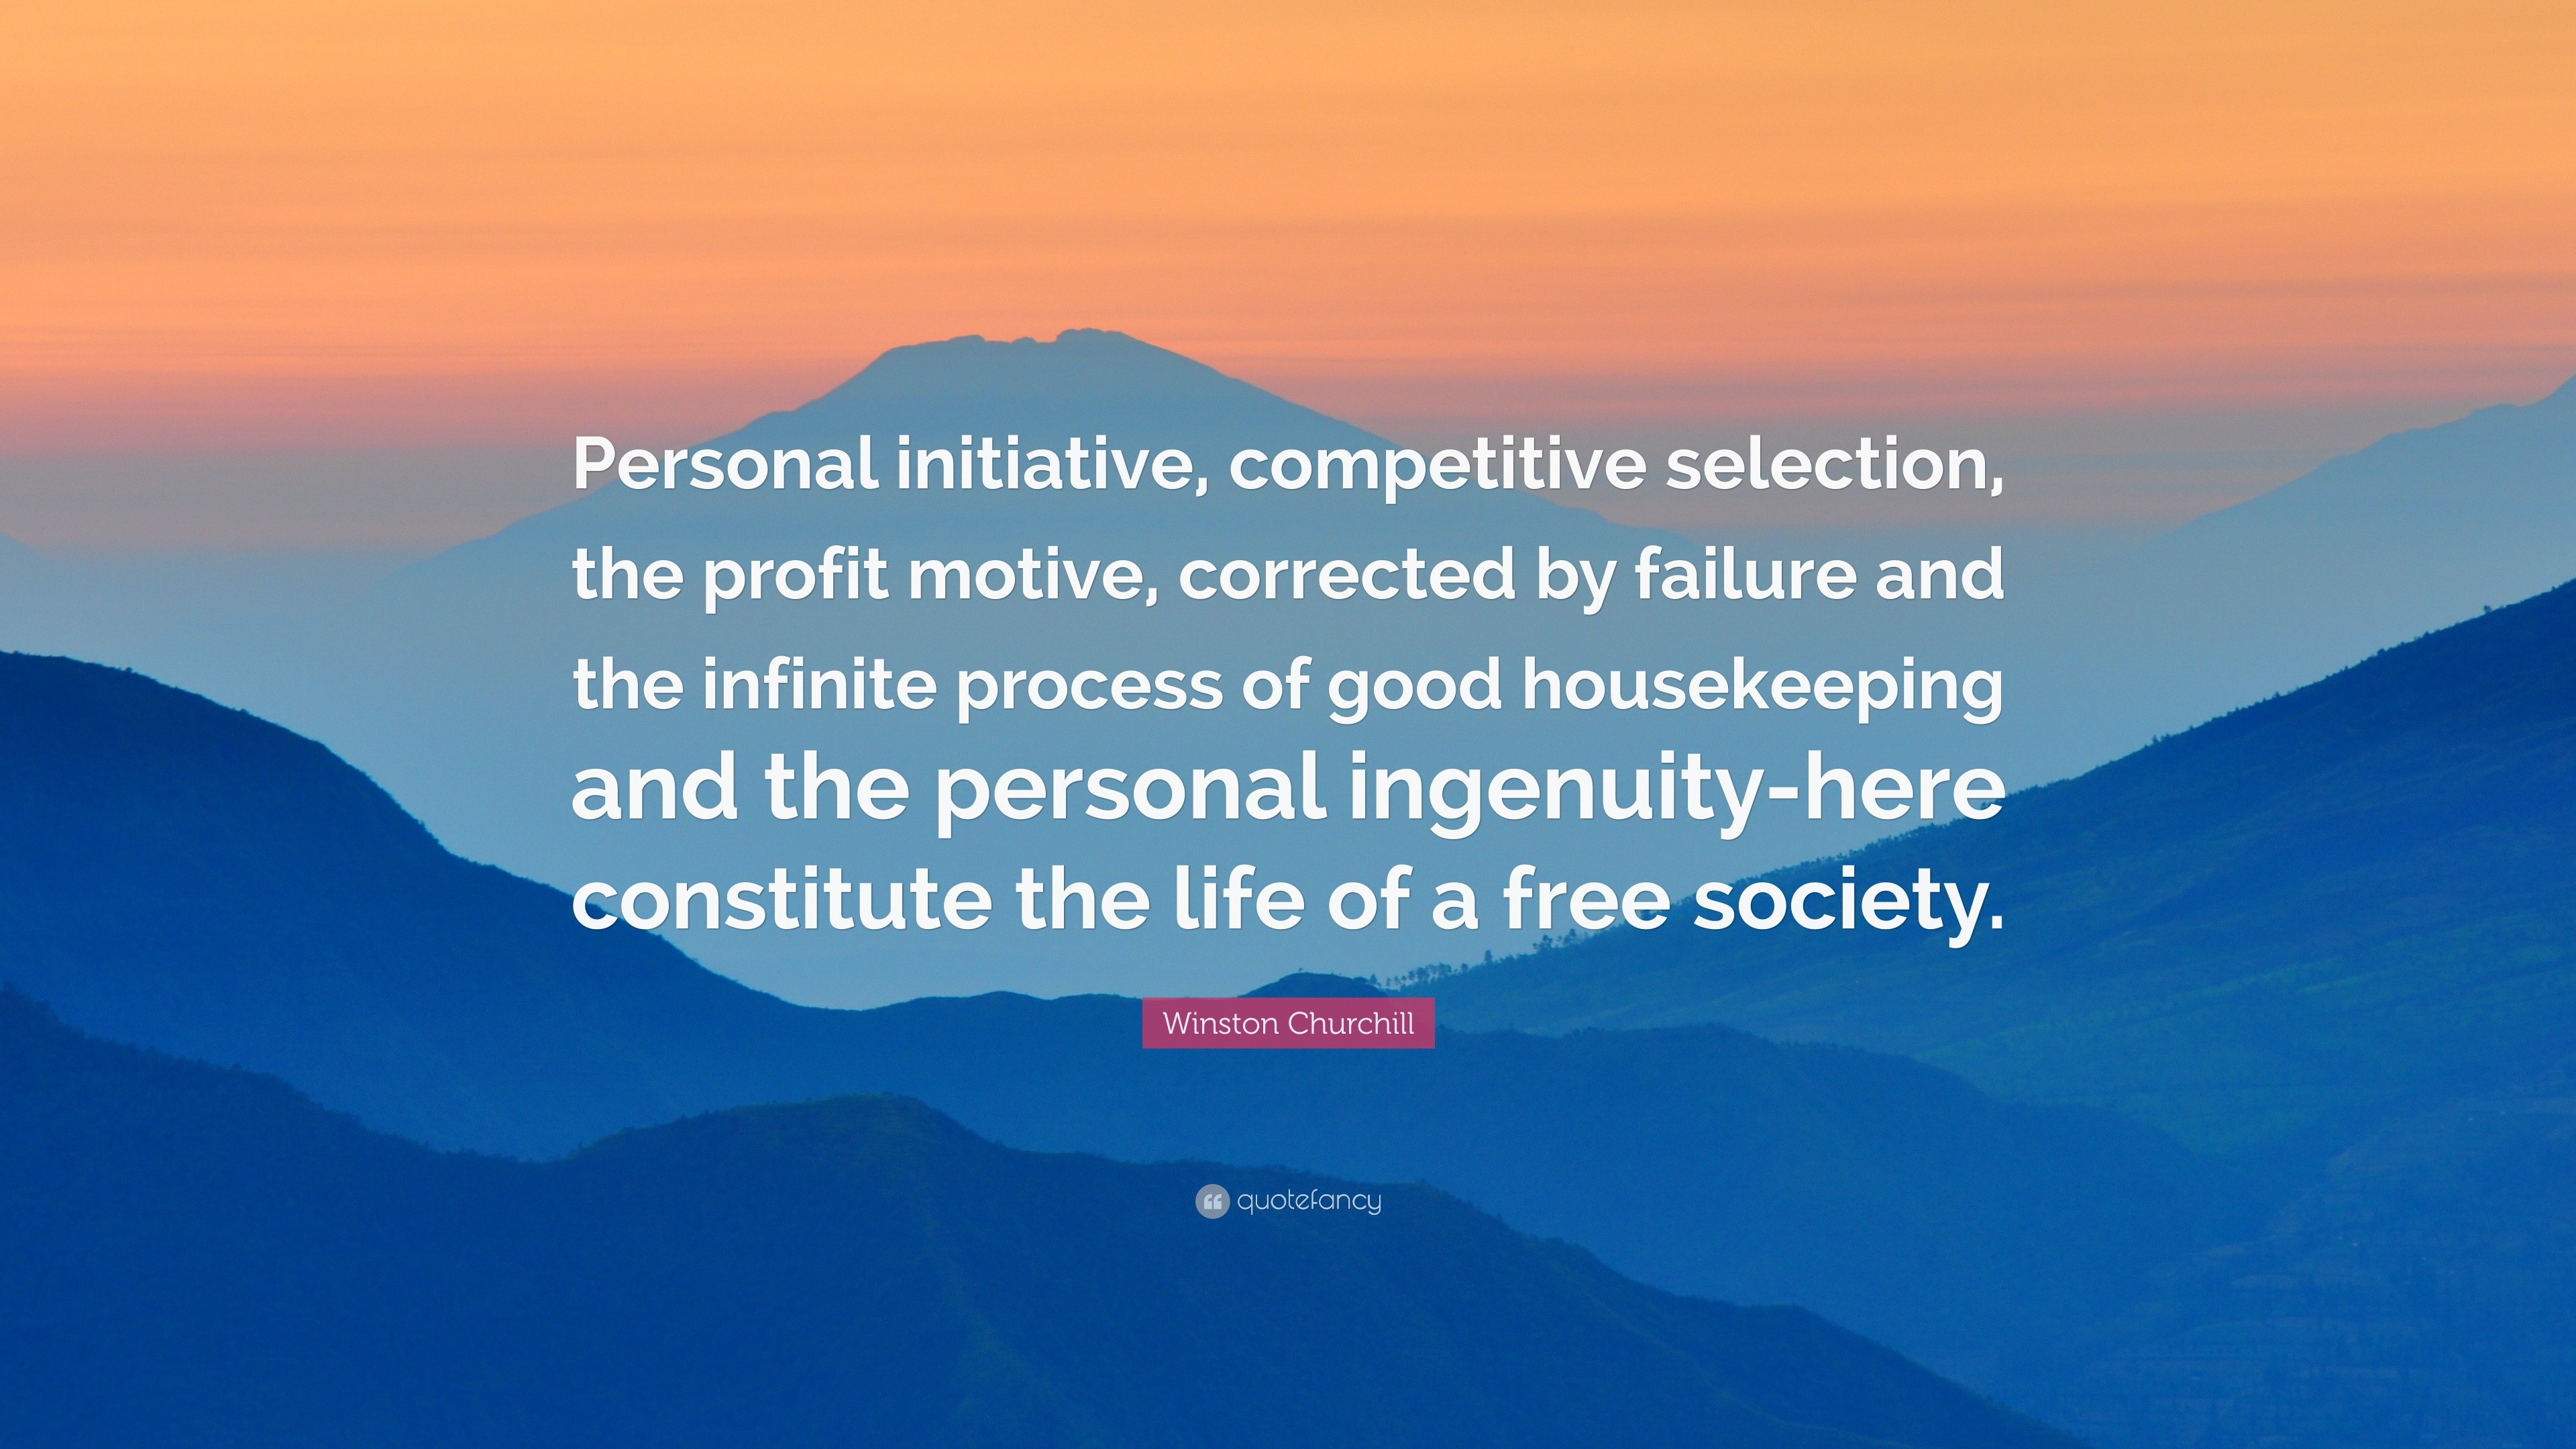 Winston Churchill Quote: “Personal initiative, competitive selection ...